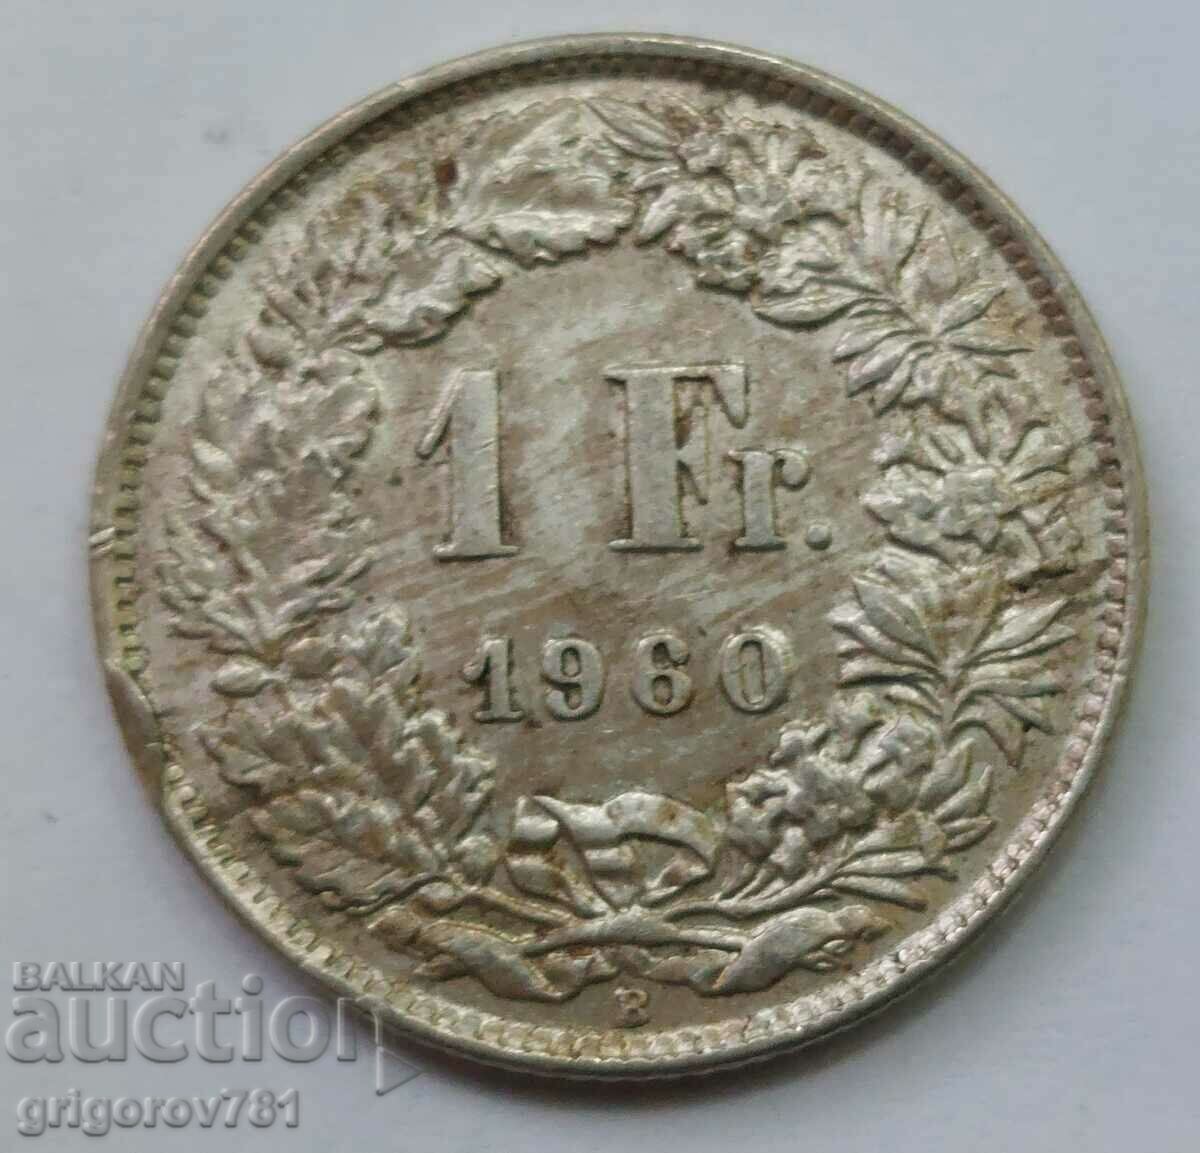 1 Franc Argint Elveția 1960 B - Monedă de argint #40